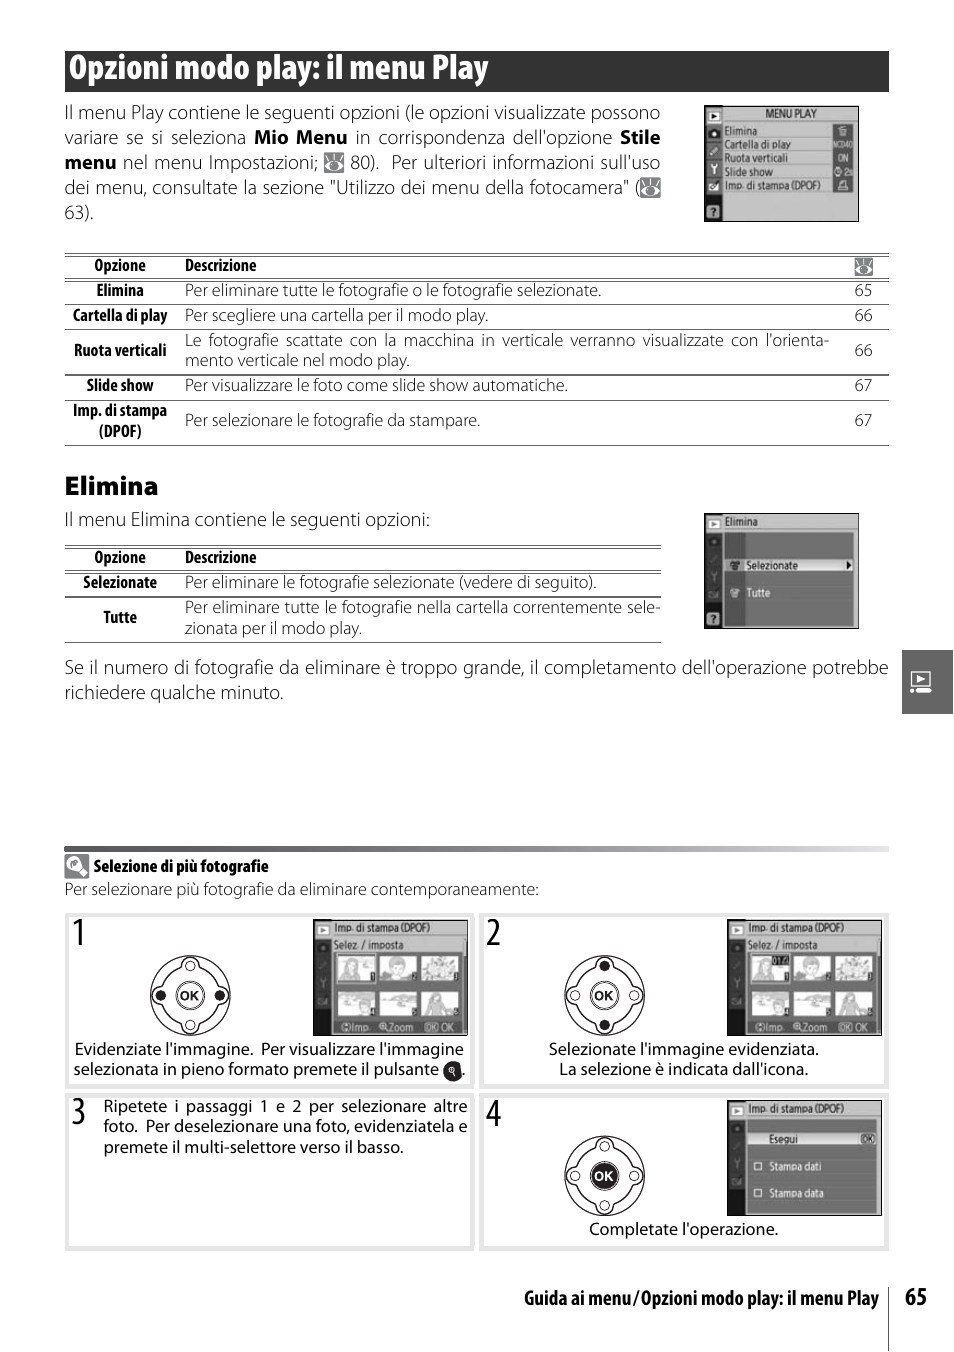 Opzioni play: il menu play, Opzioni modo play: il menu play, Elimina | Nikon D40 Manuale d'uso | Pagina 77 / 139